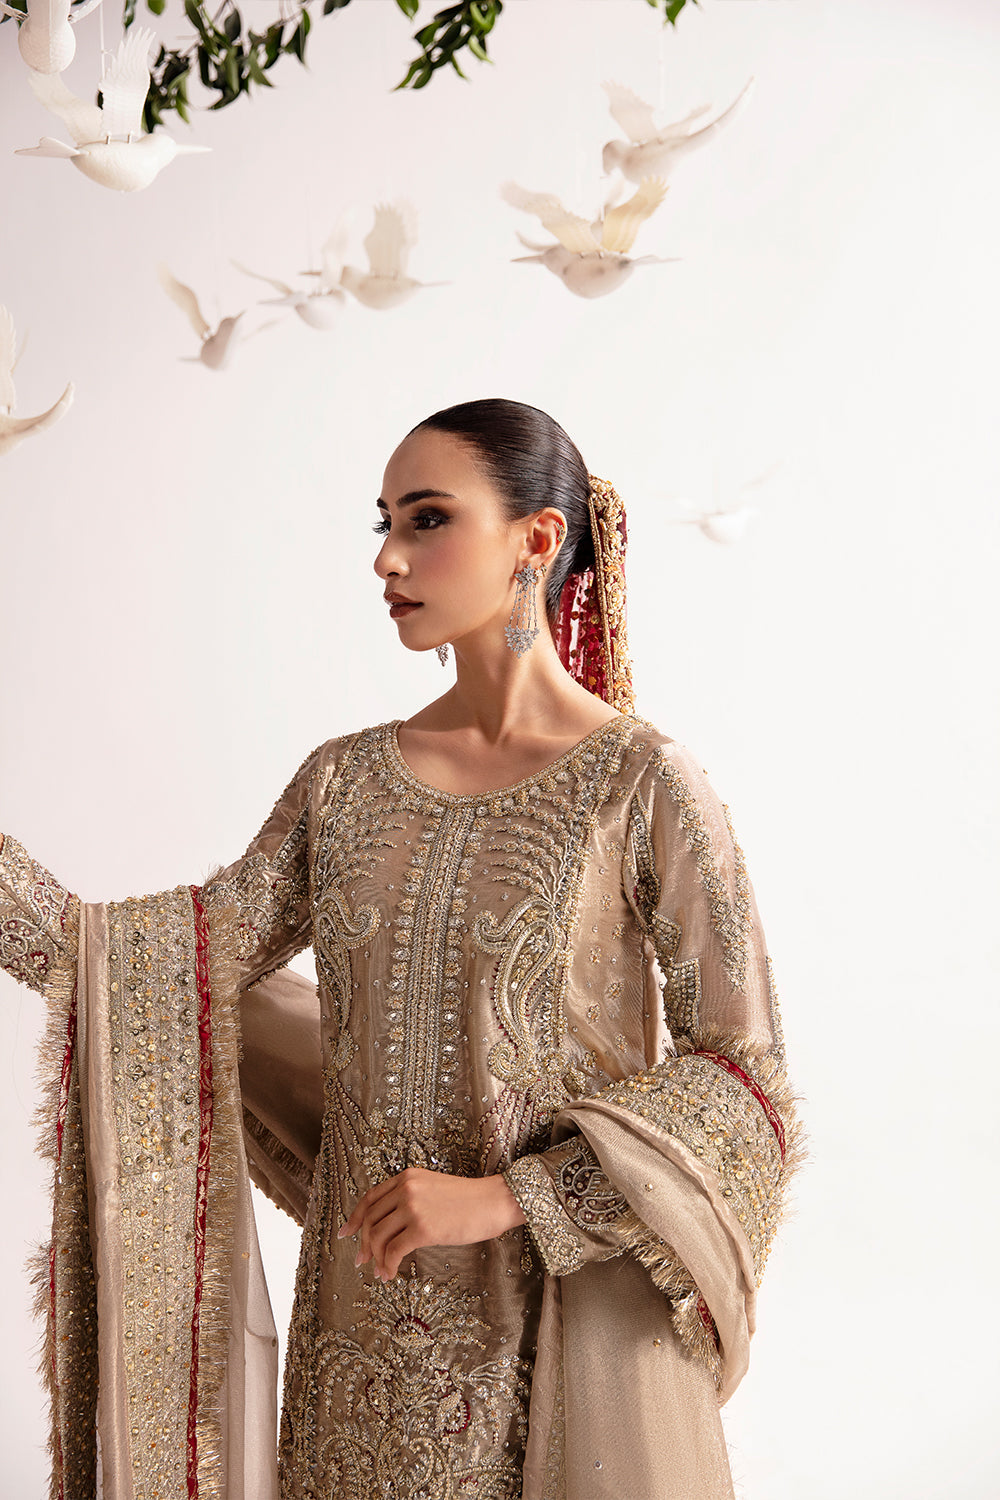 Zofia - Bridal Couture'23 by Saira Rizwan